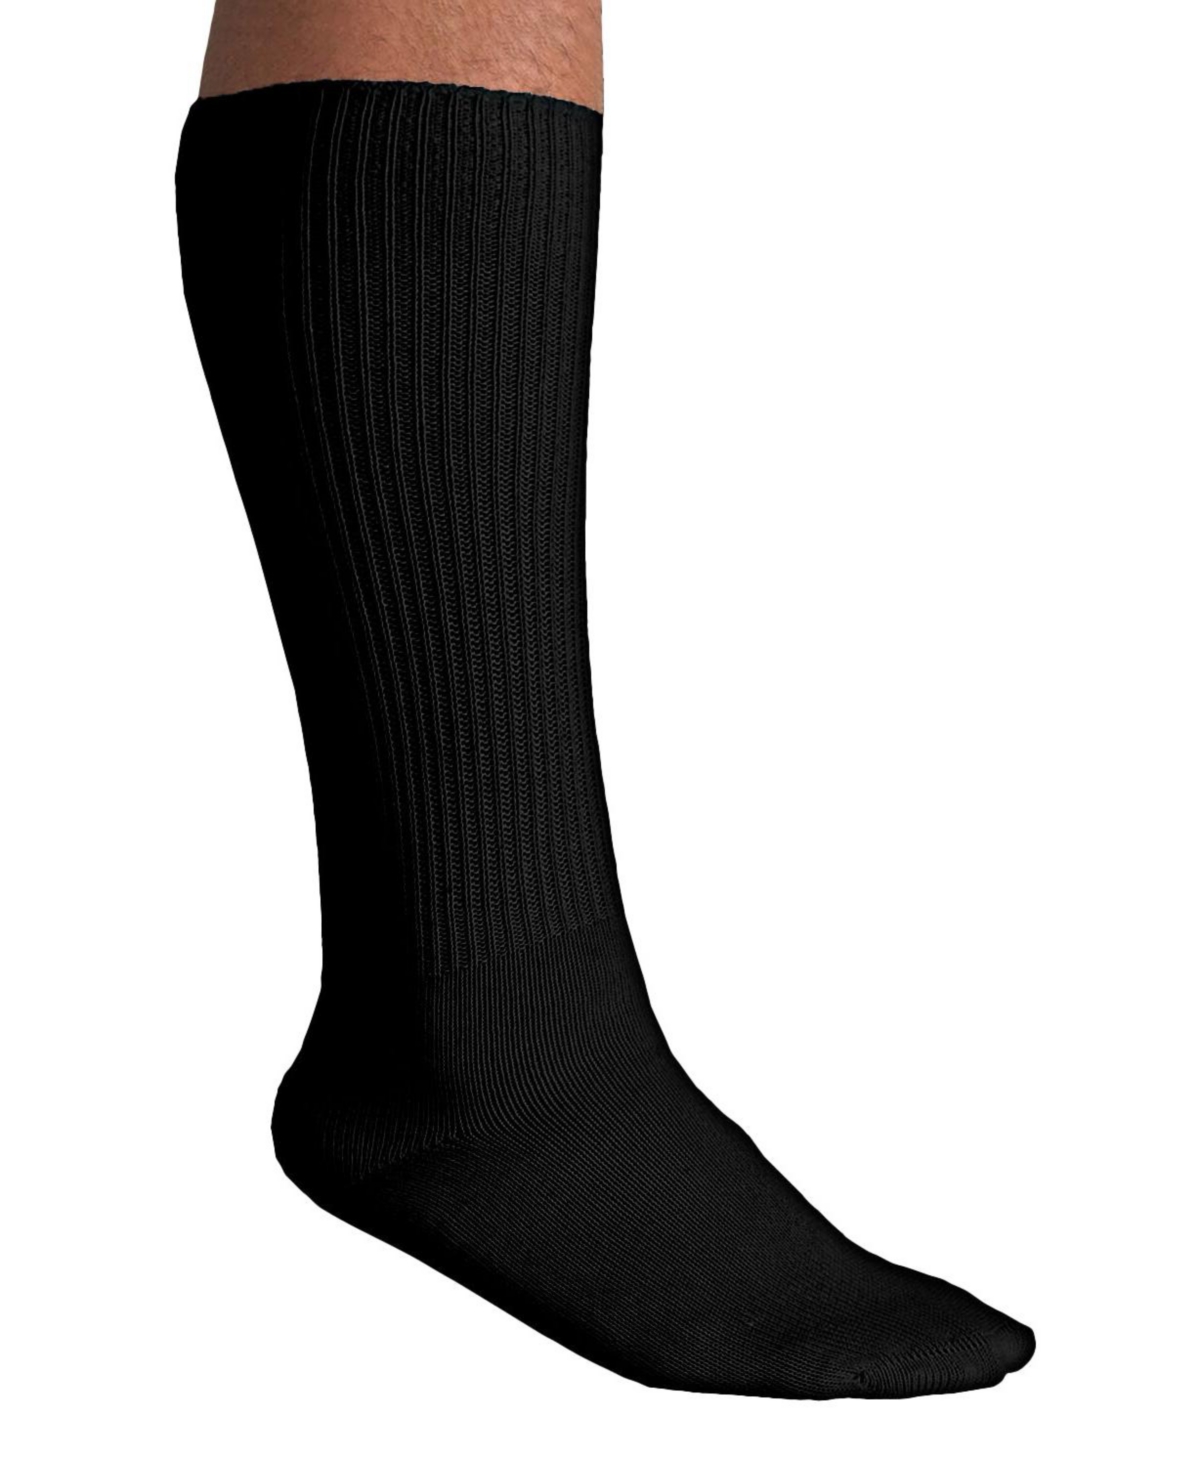 Big & Tall Diabetic Over-The-Calf Socks - White